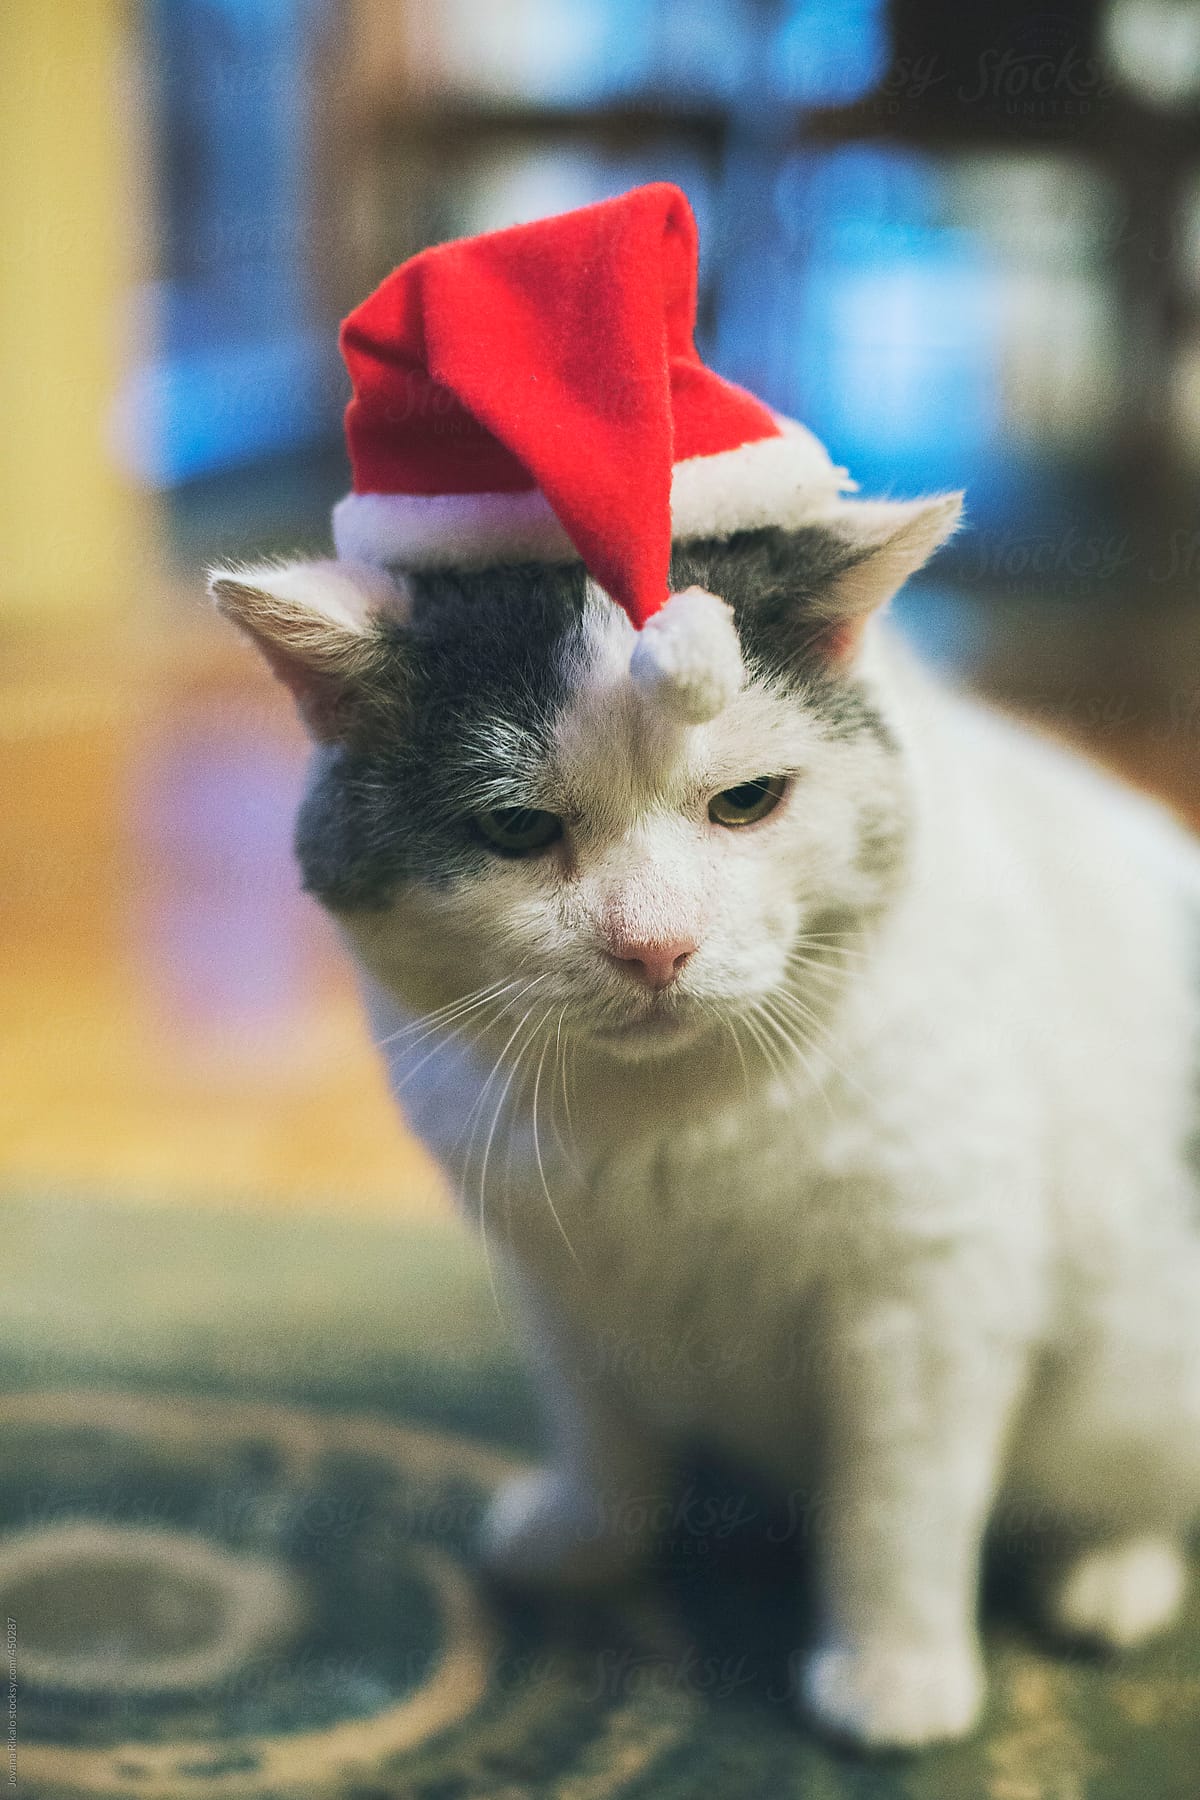 Cat wearing Santa hat